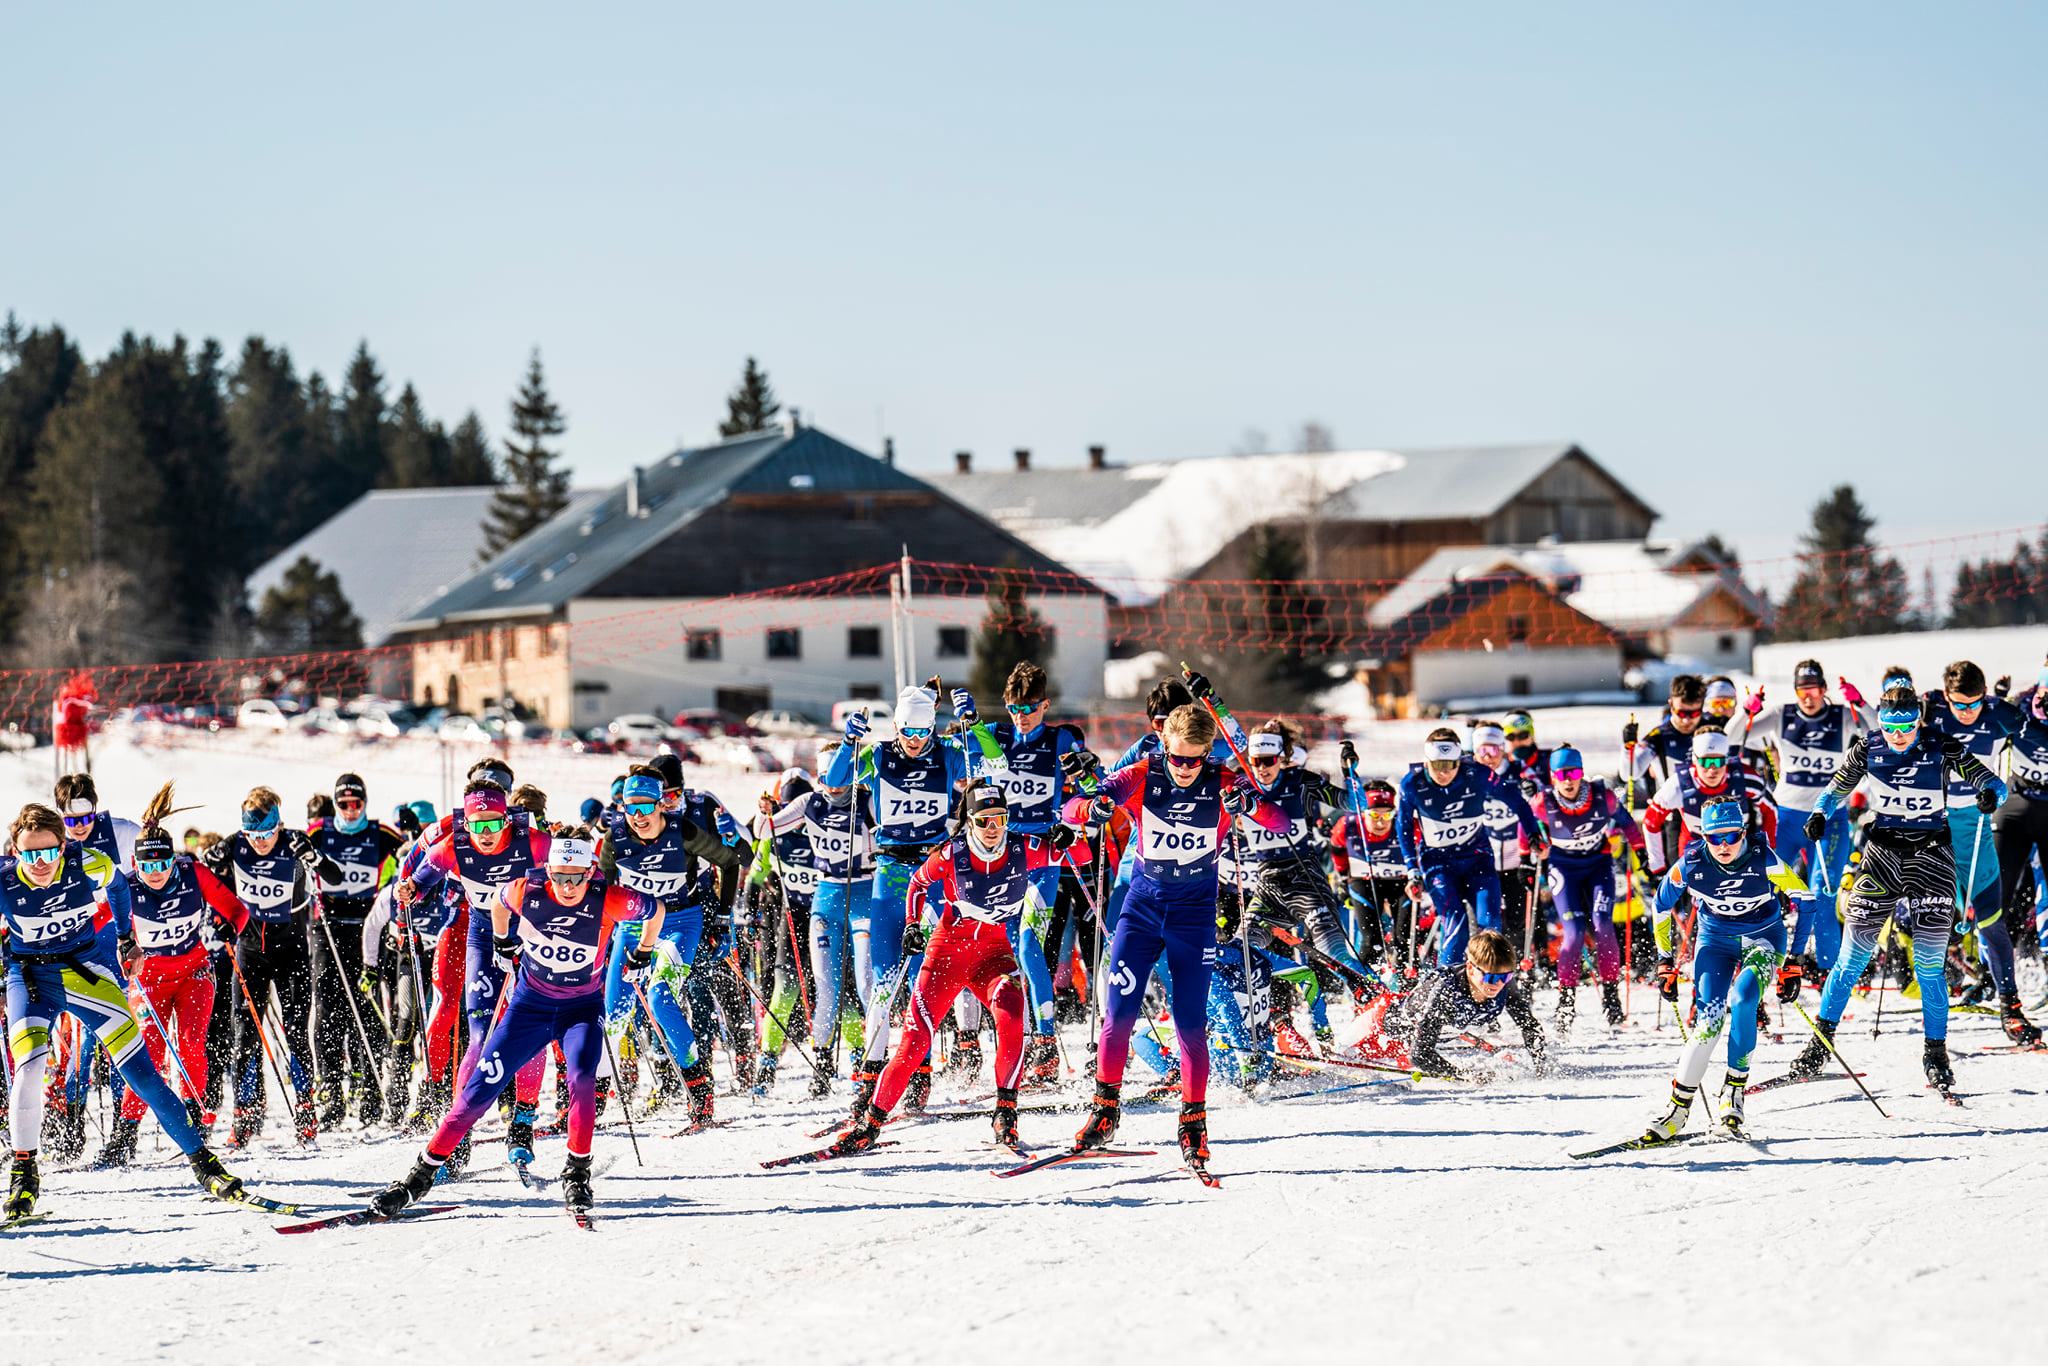 Start of the Transju cross-country ski race in the Jura